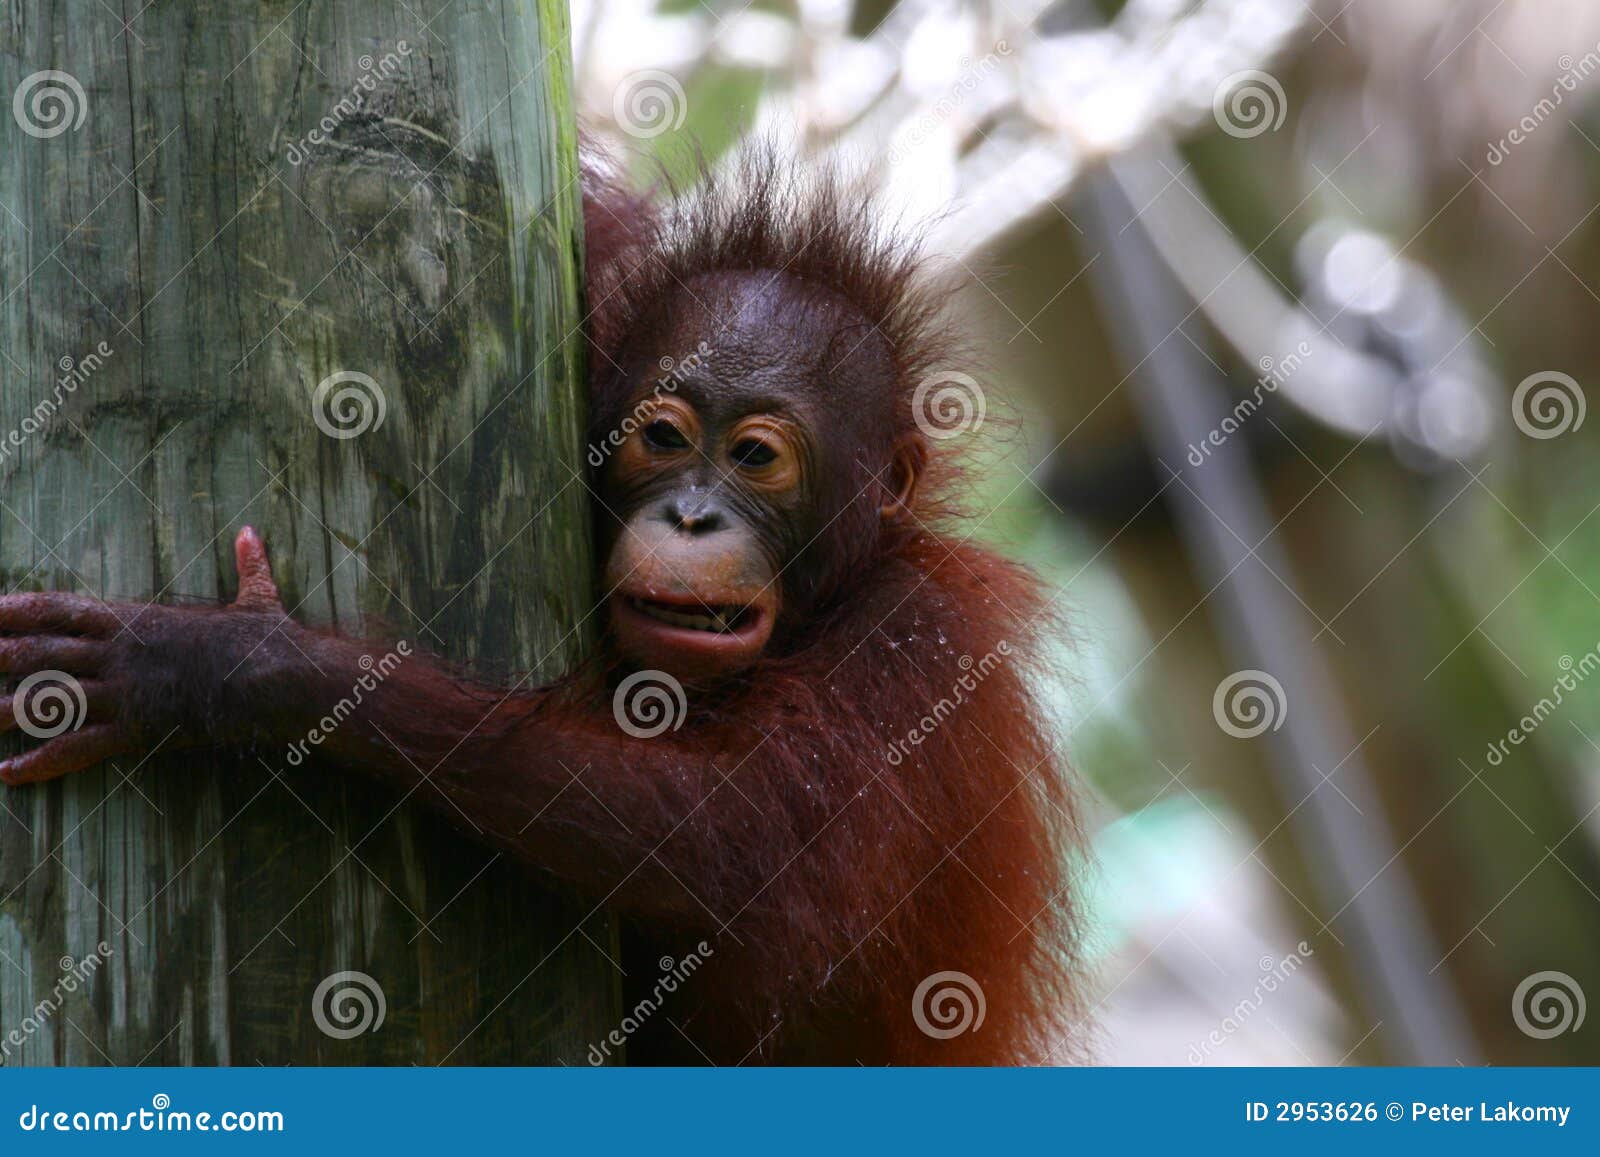 orangutans offspring